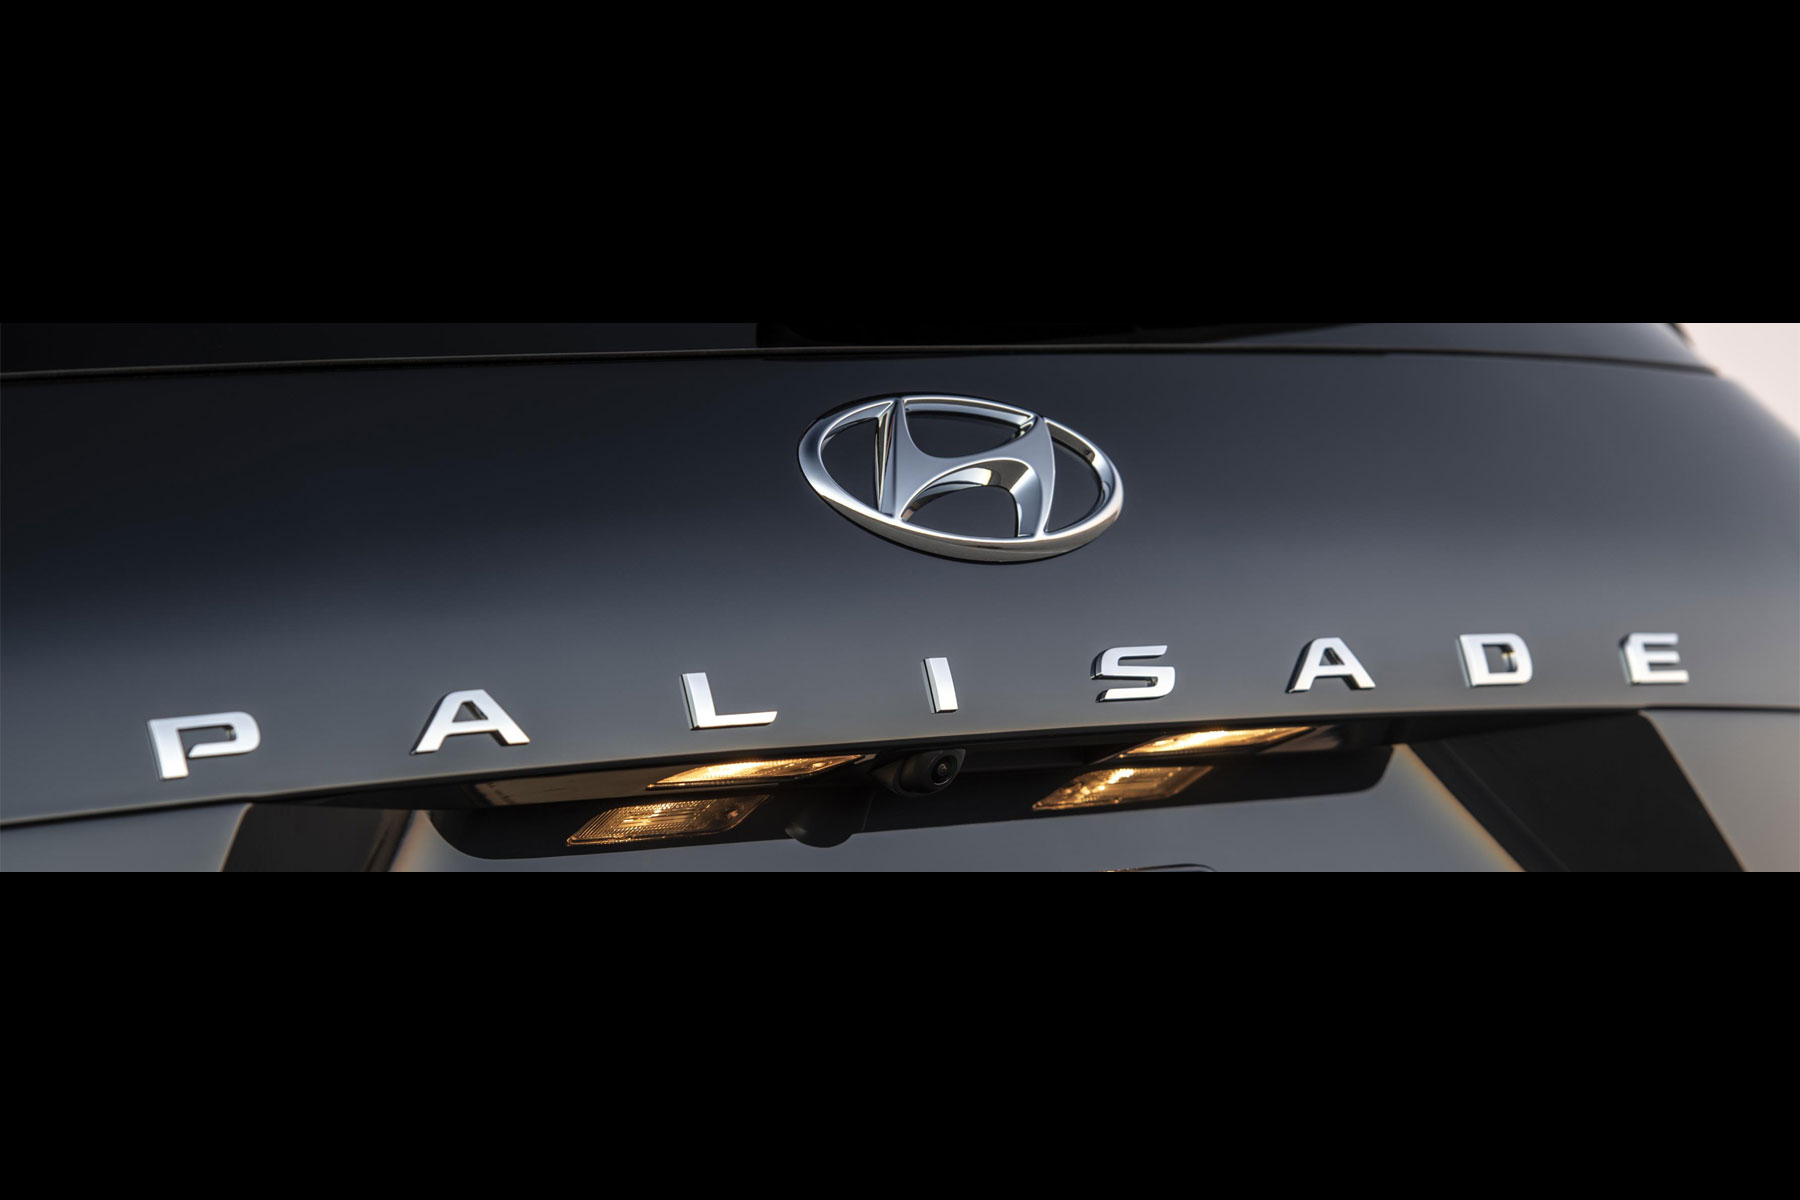 2019 Hyundai Palisade teaser